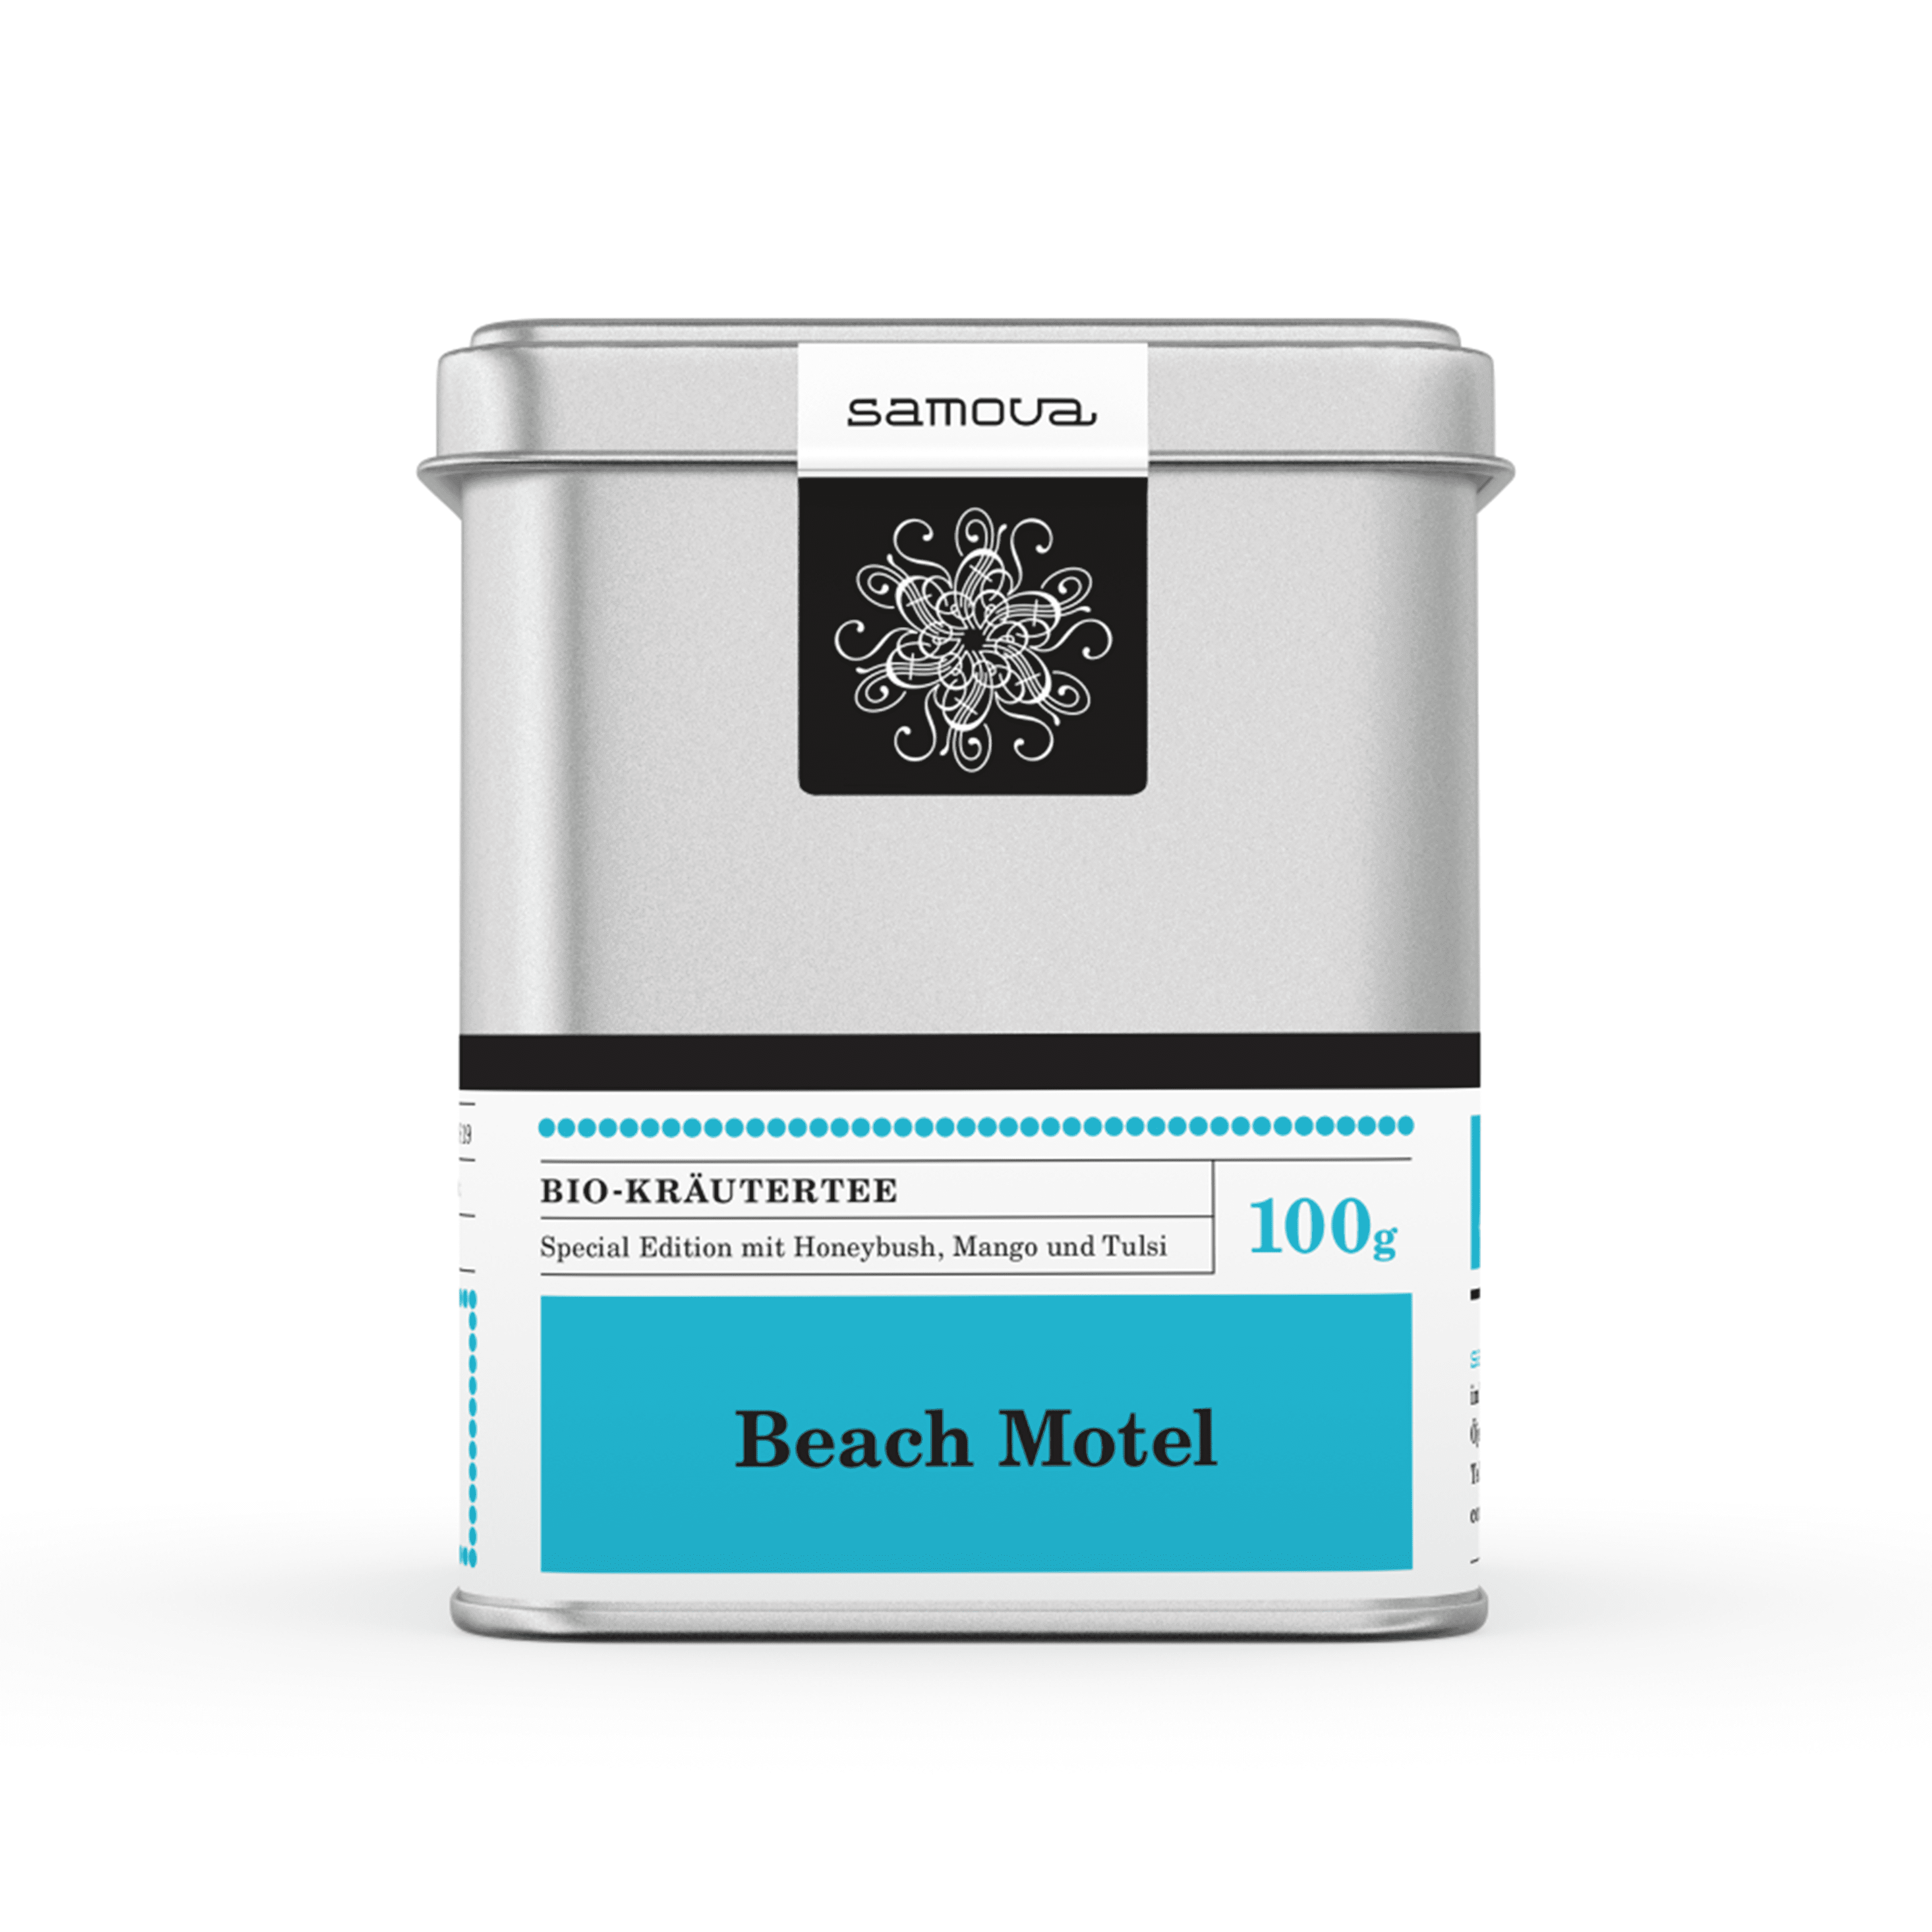 Can of Beach Motel te